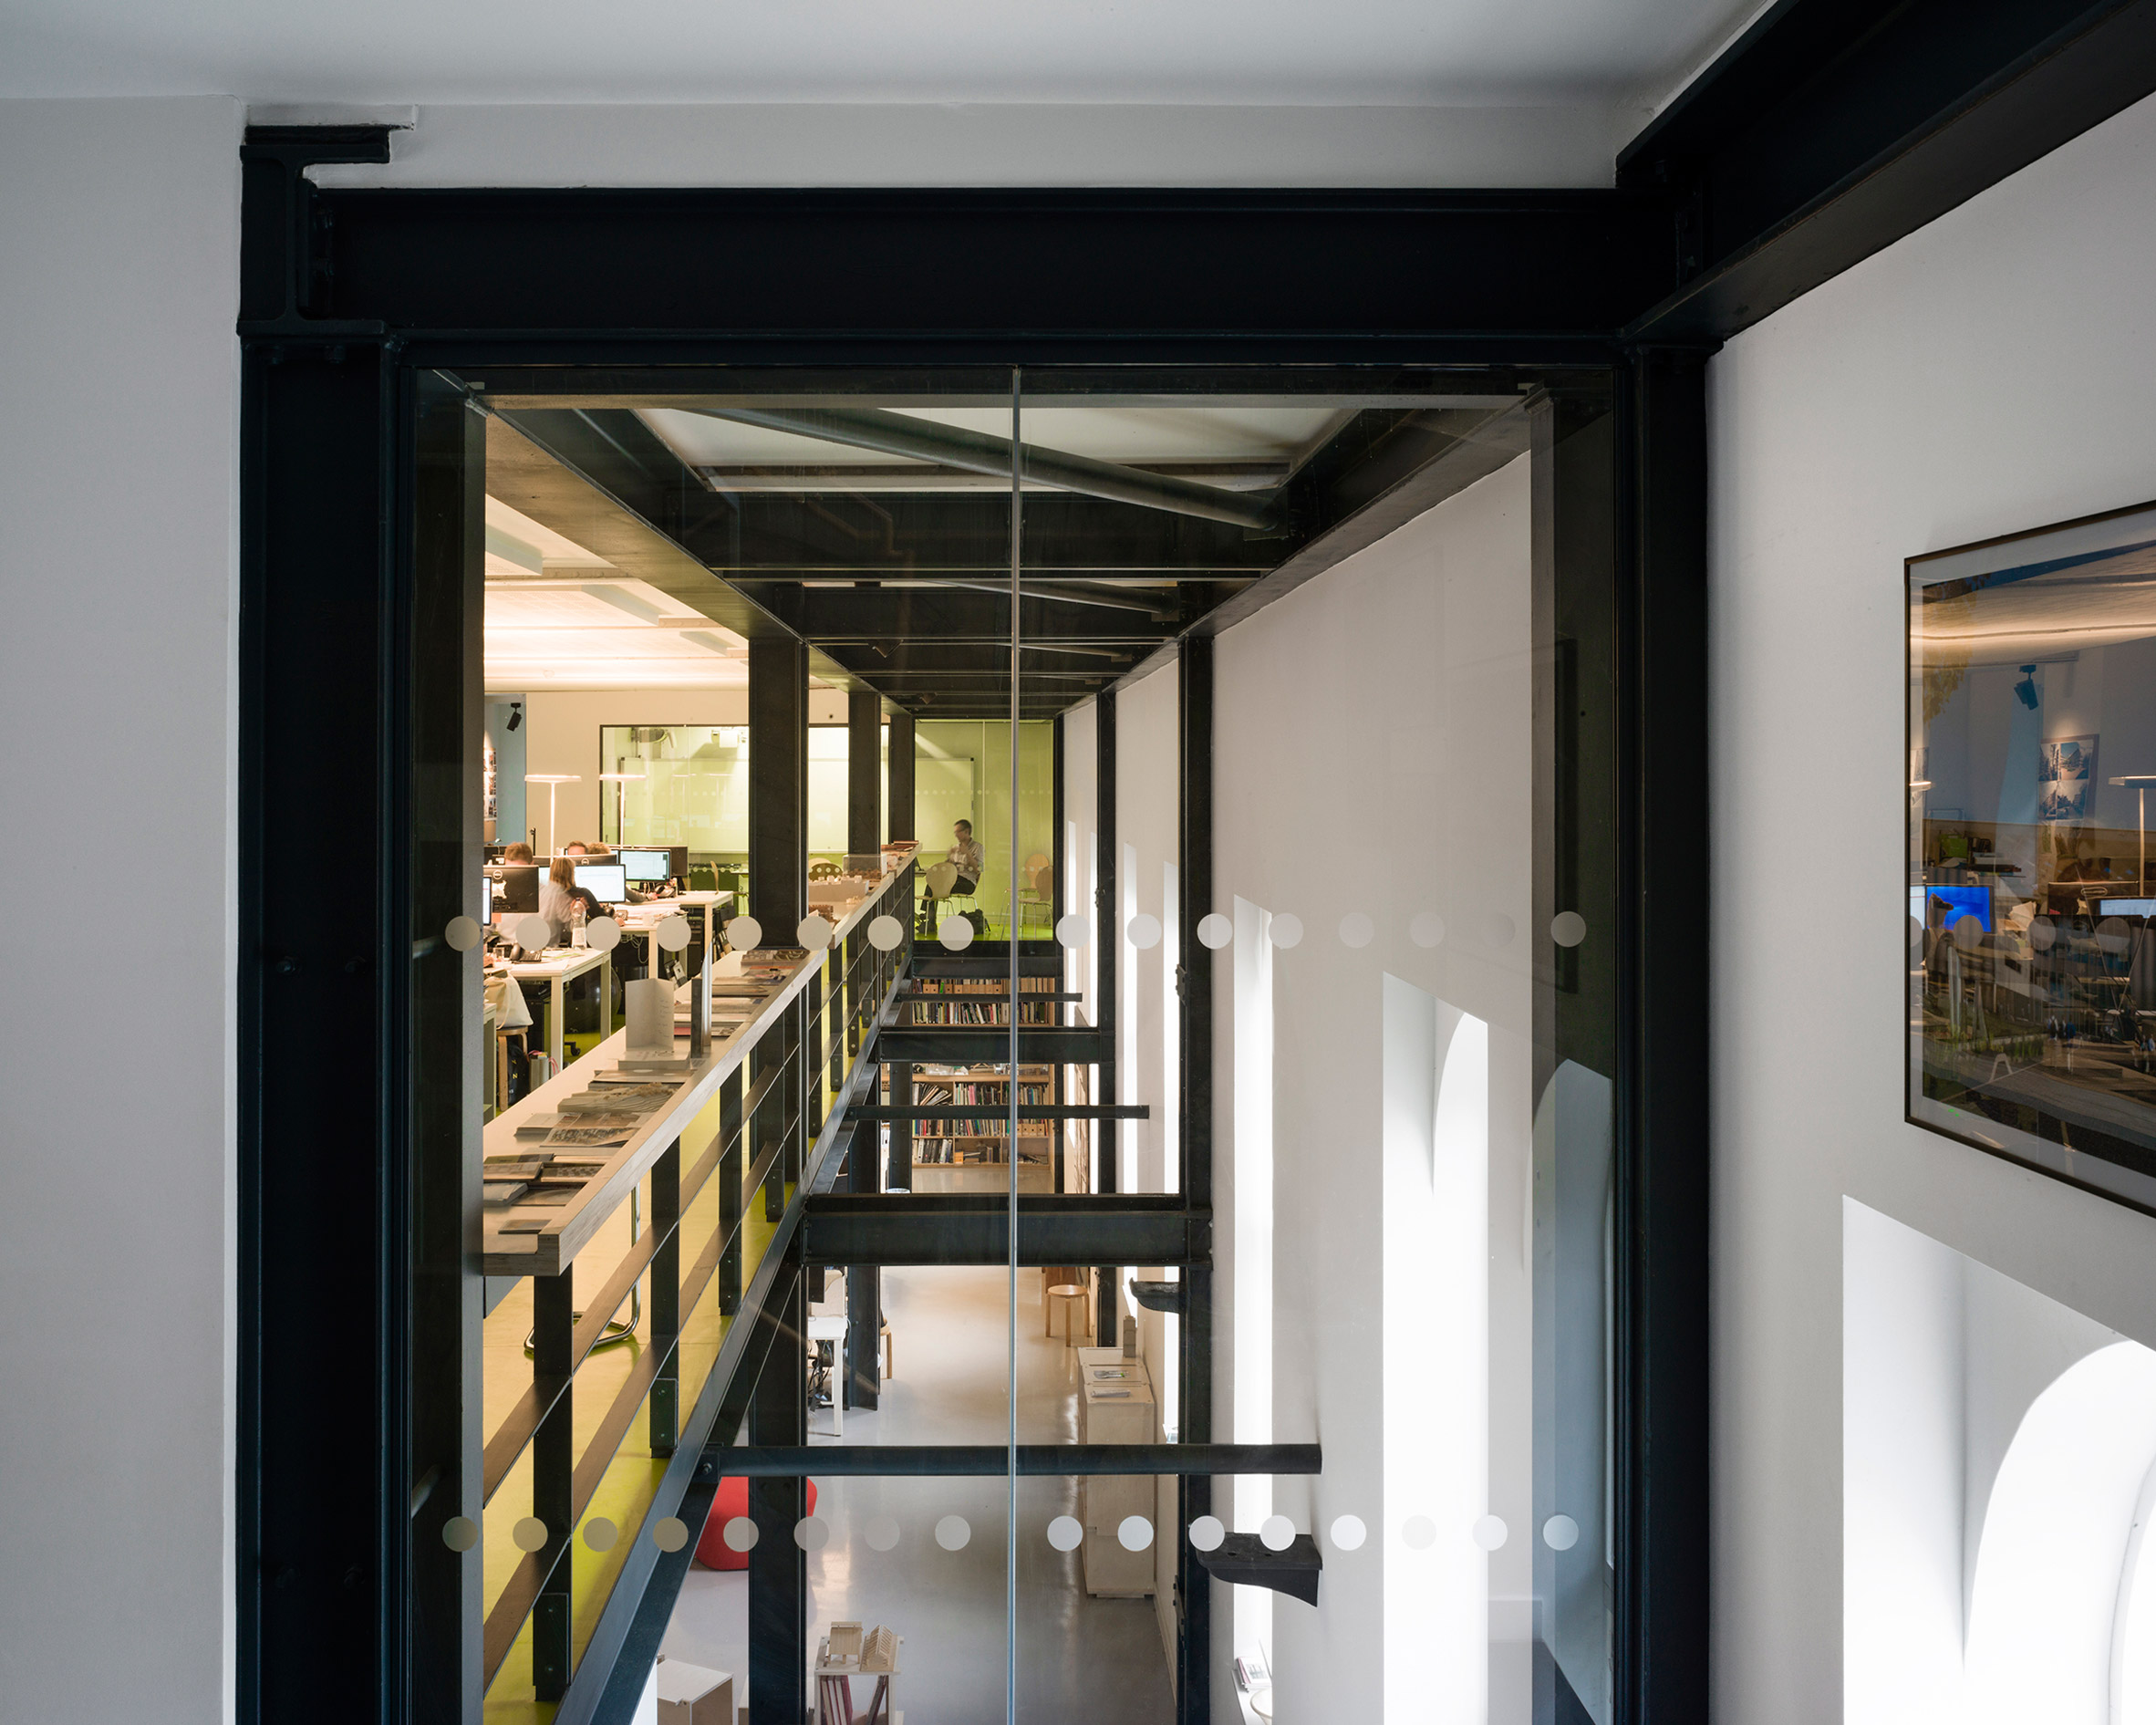 Architects' studios by Marc Goodman